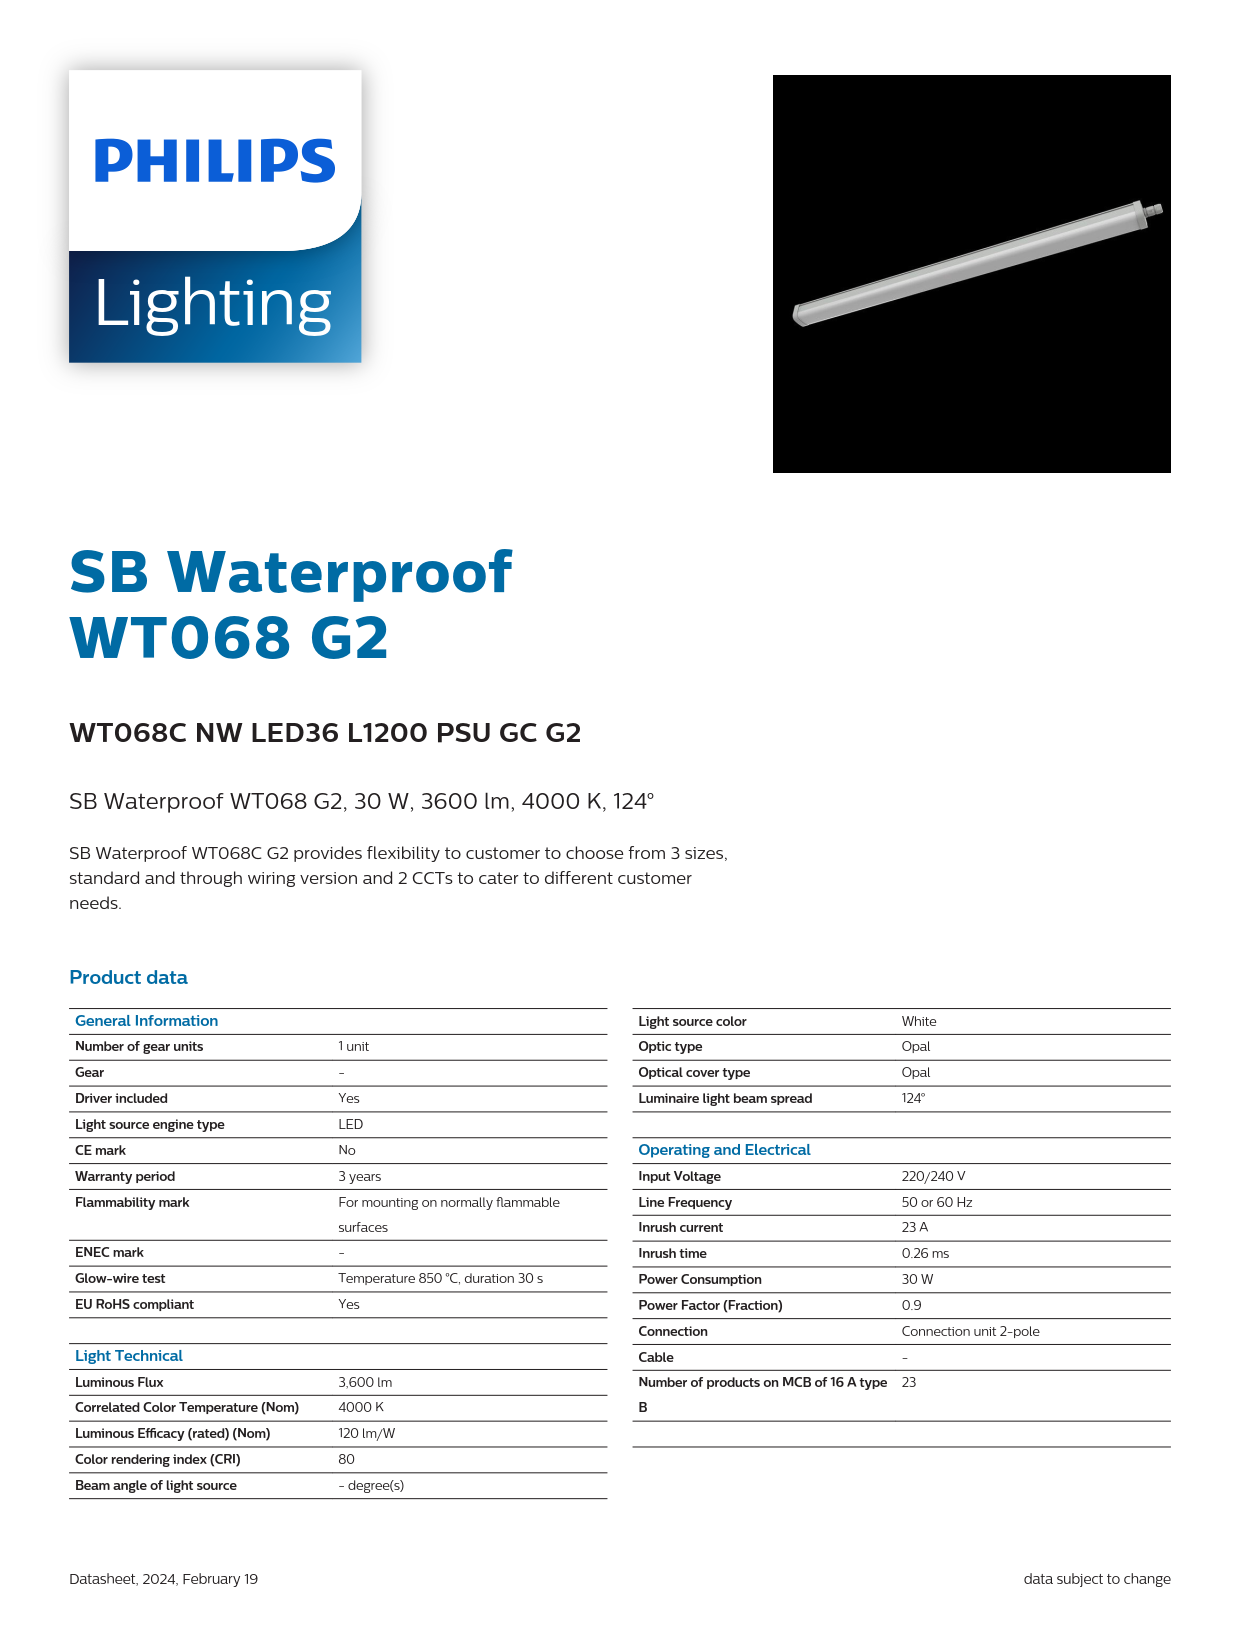 PHILIPS Waterproof Fixture light WT068C NW LED36 L1200 PSU GC G2 911401861885